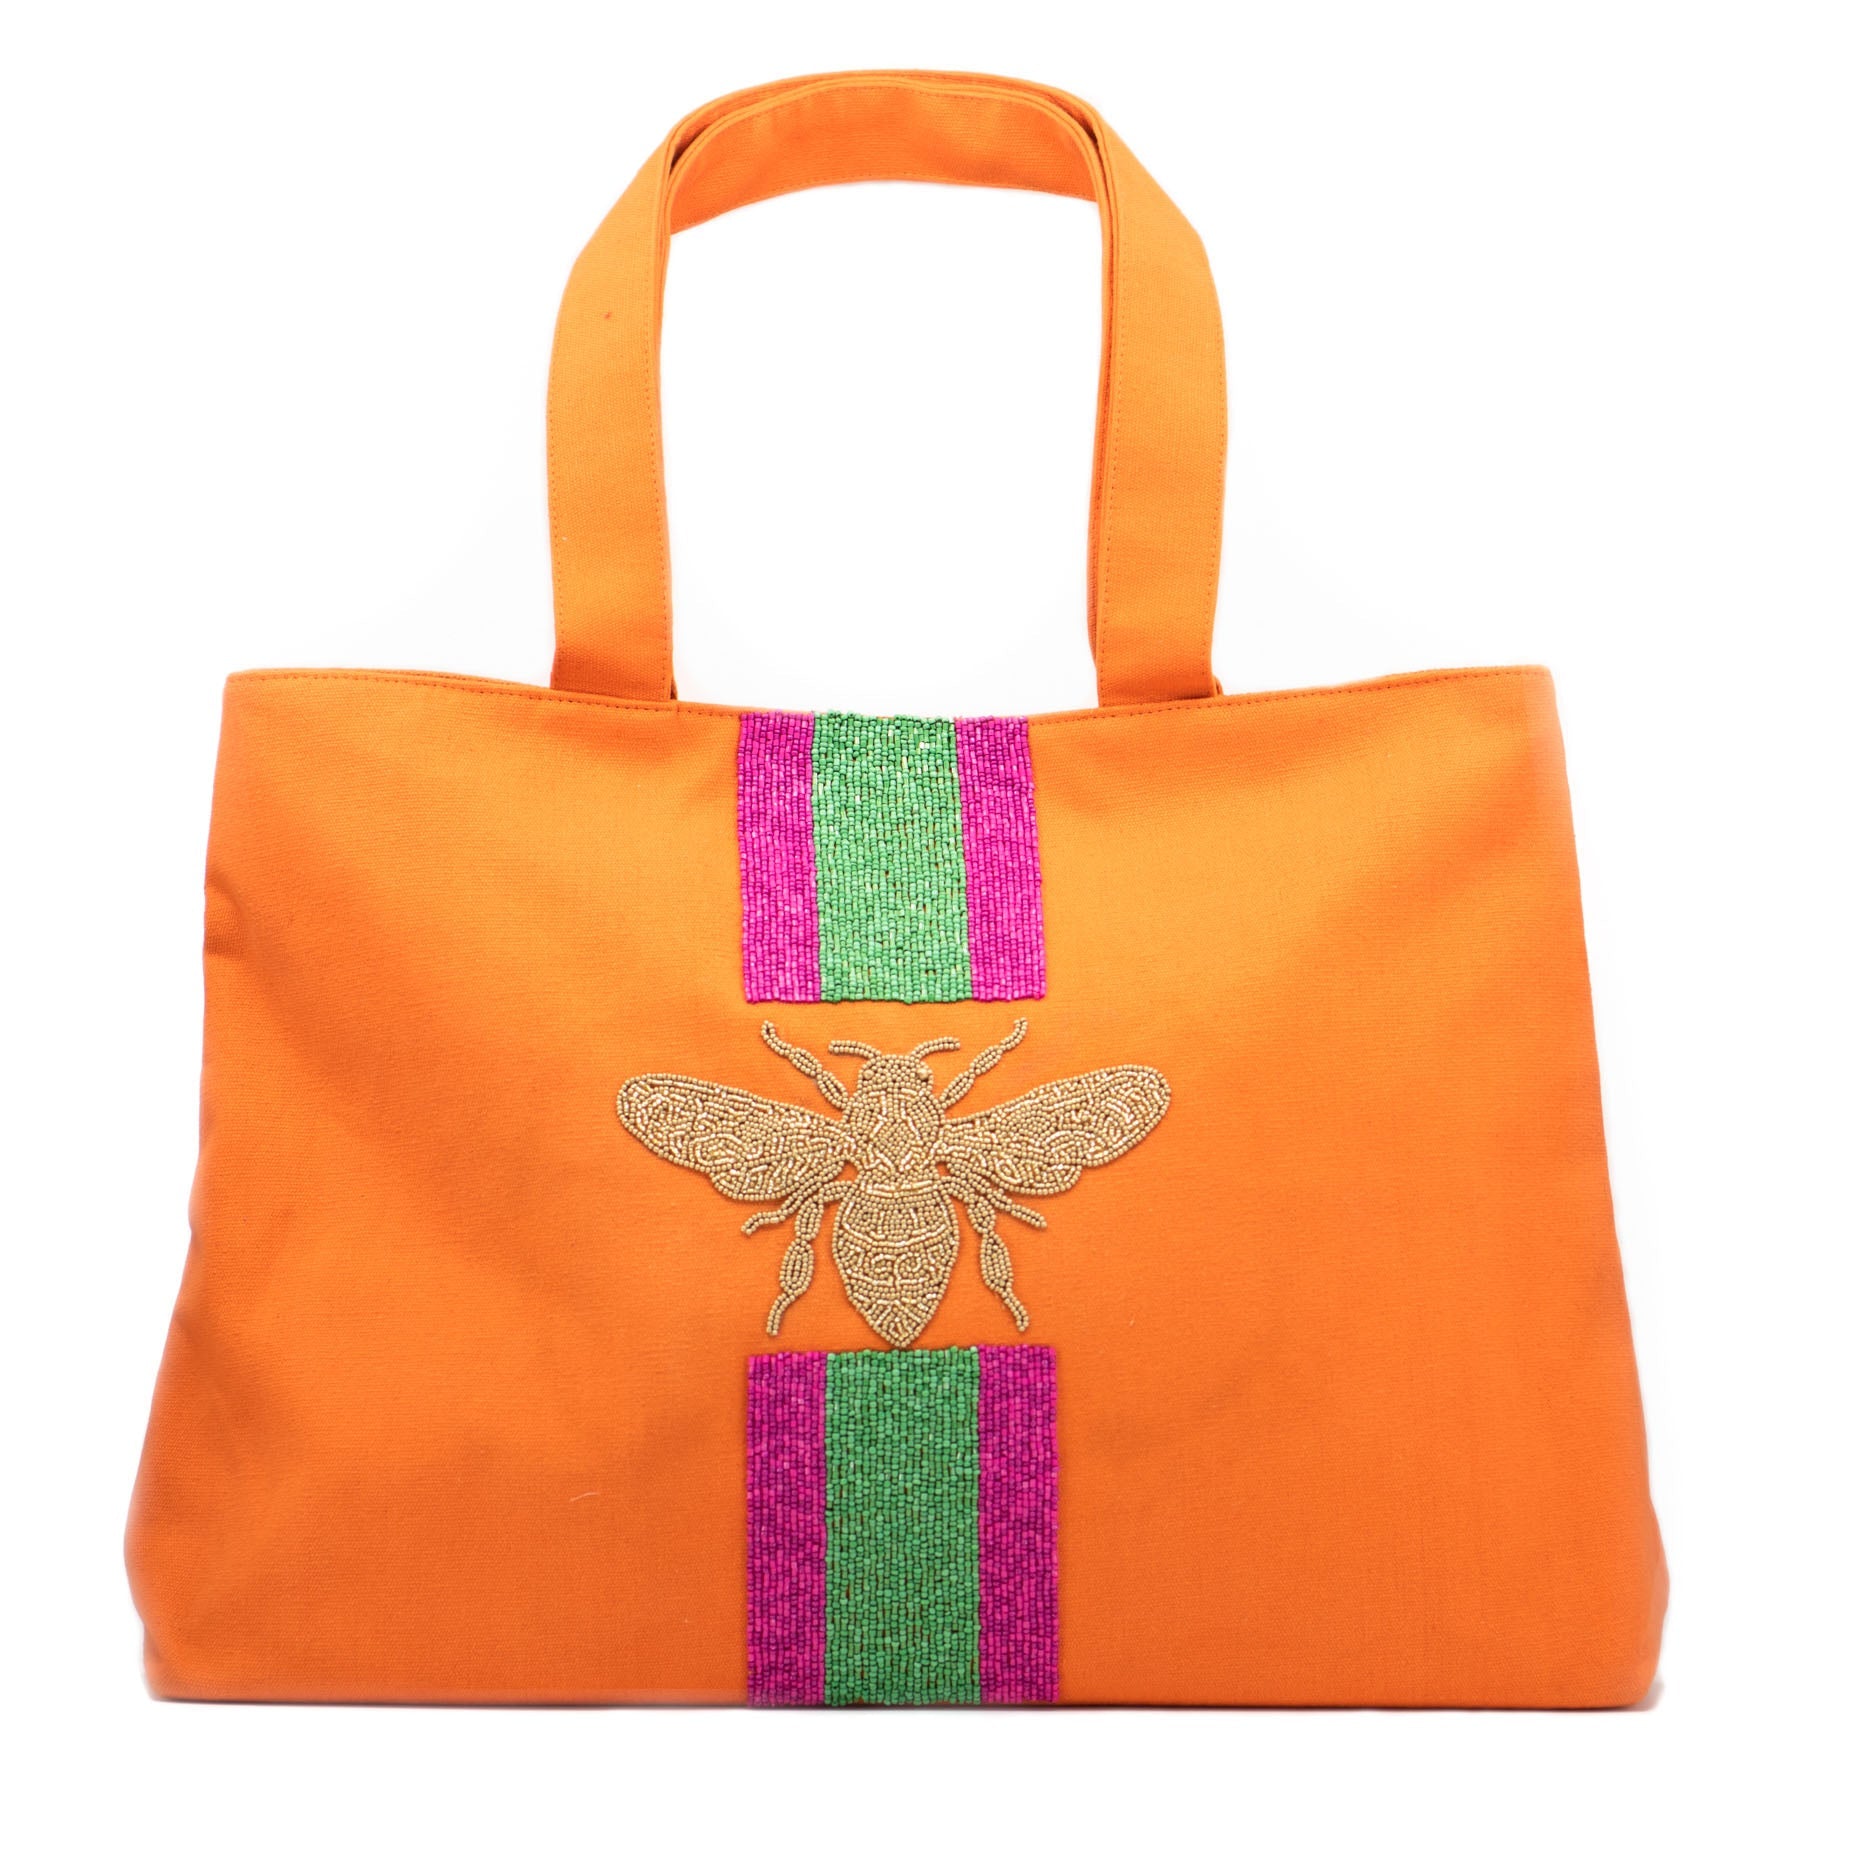 Bee bags by de L'avion | Michael kors jet, Fashion handbags, Bags